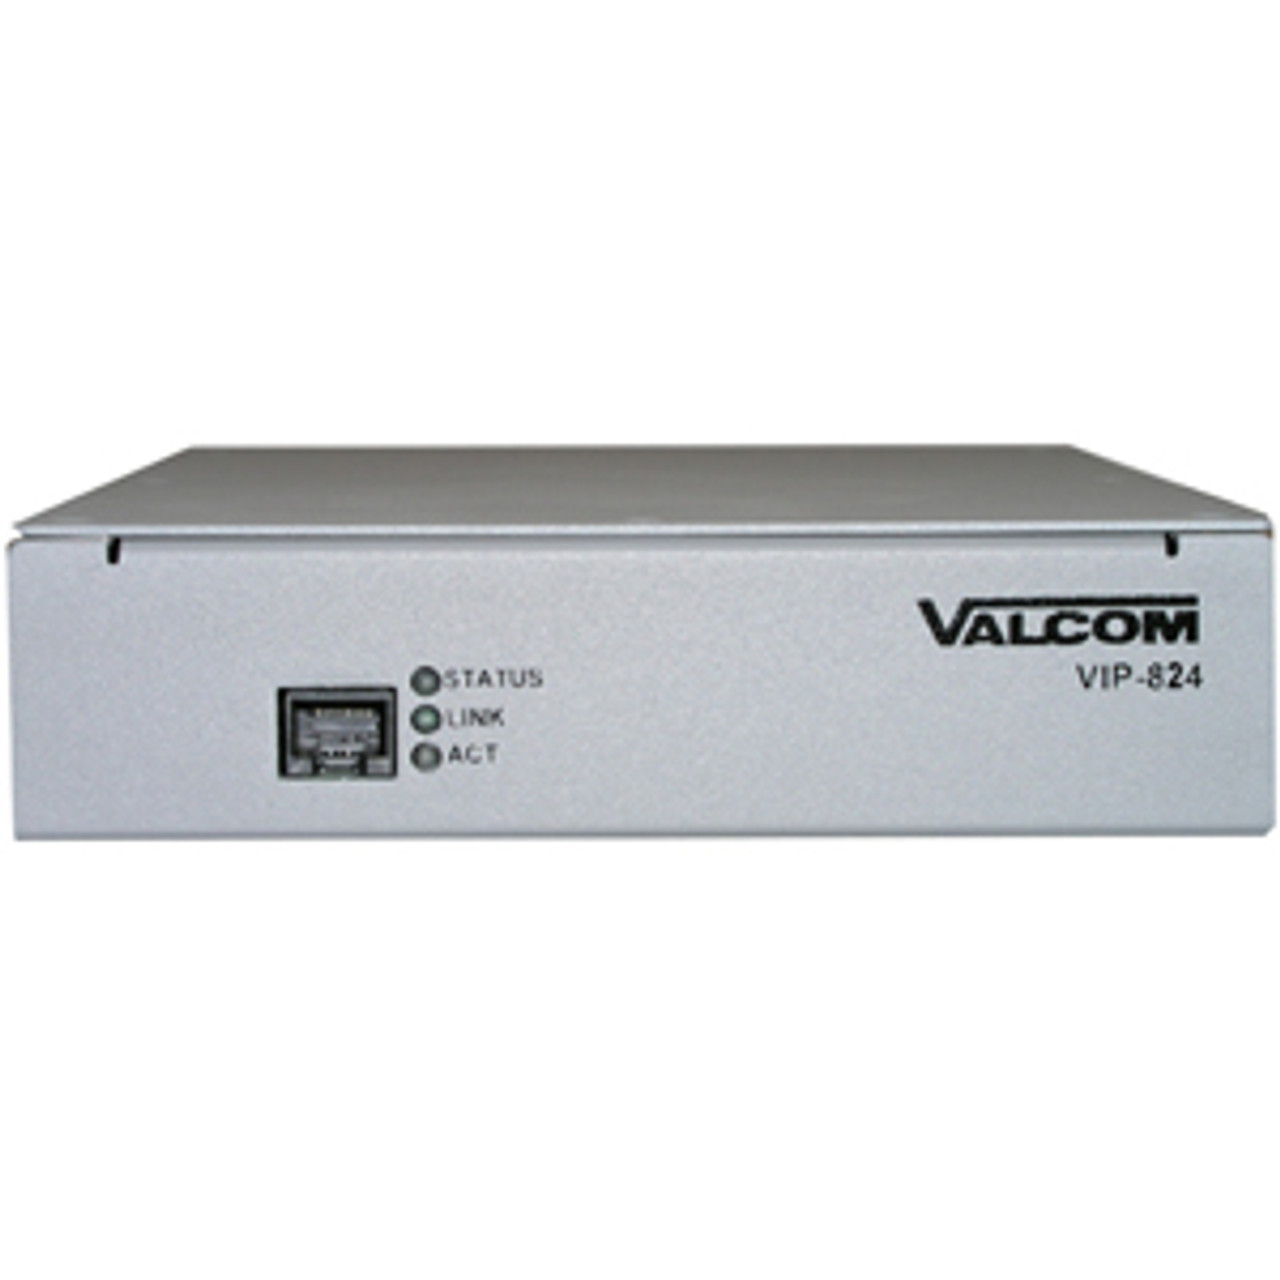 VIP-824 Valcom VIP-824 VoIP Gateway 4 x FXO , 4 x FXS , 1 x 10/100Base-TX Network LAN